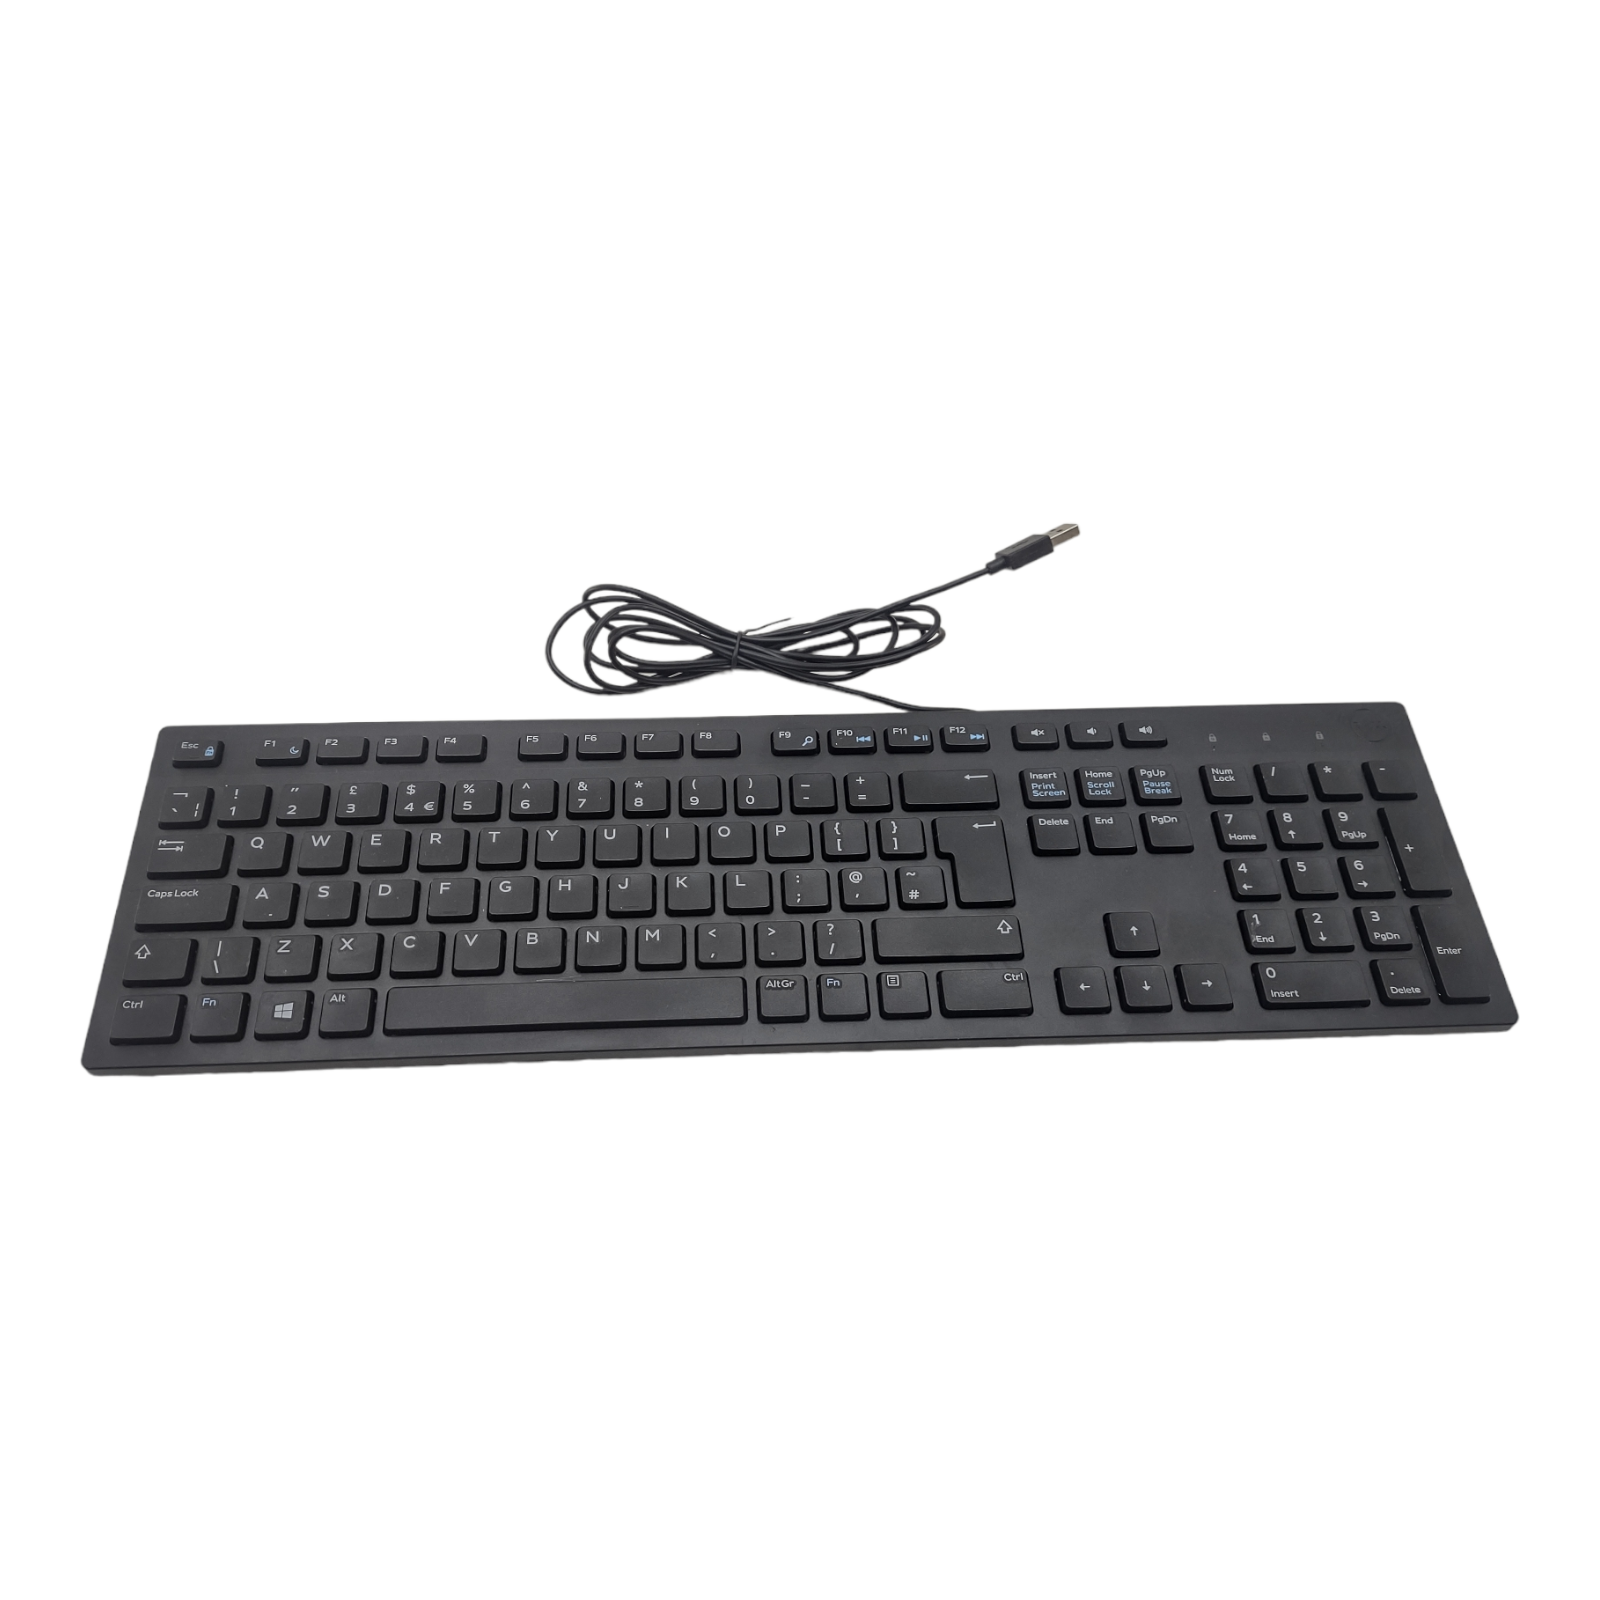 Dell KB216t Multimedia UK Keyboard - Blk ( 0RX6RM ) NEW